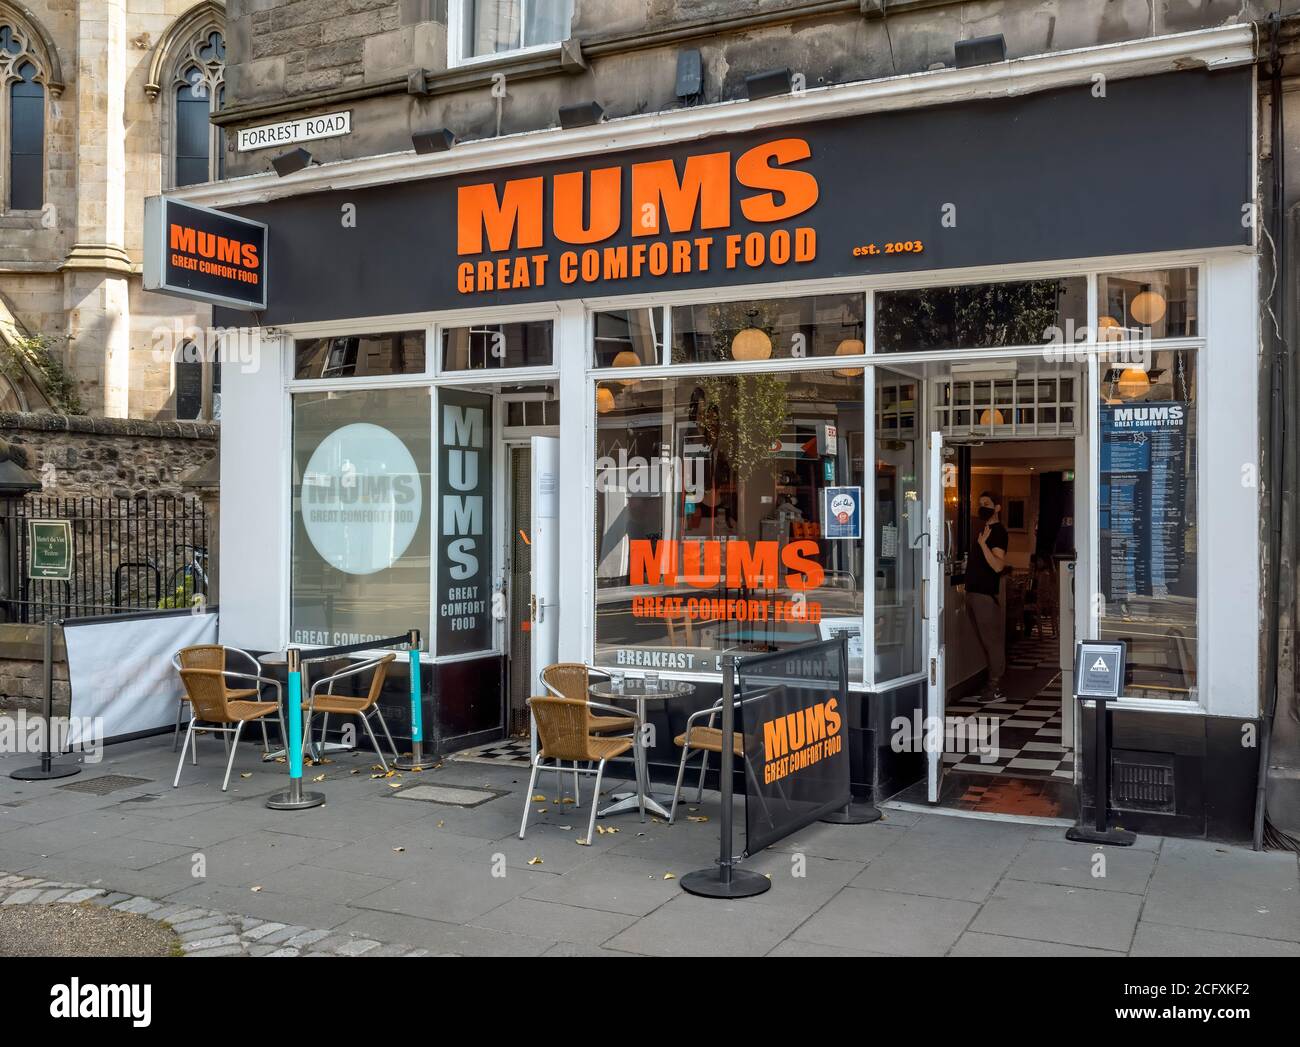 Mums Restaurant - Great Comfort Food - Edinburgh, Scotland, UK. Stock Photo